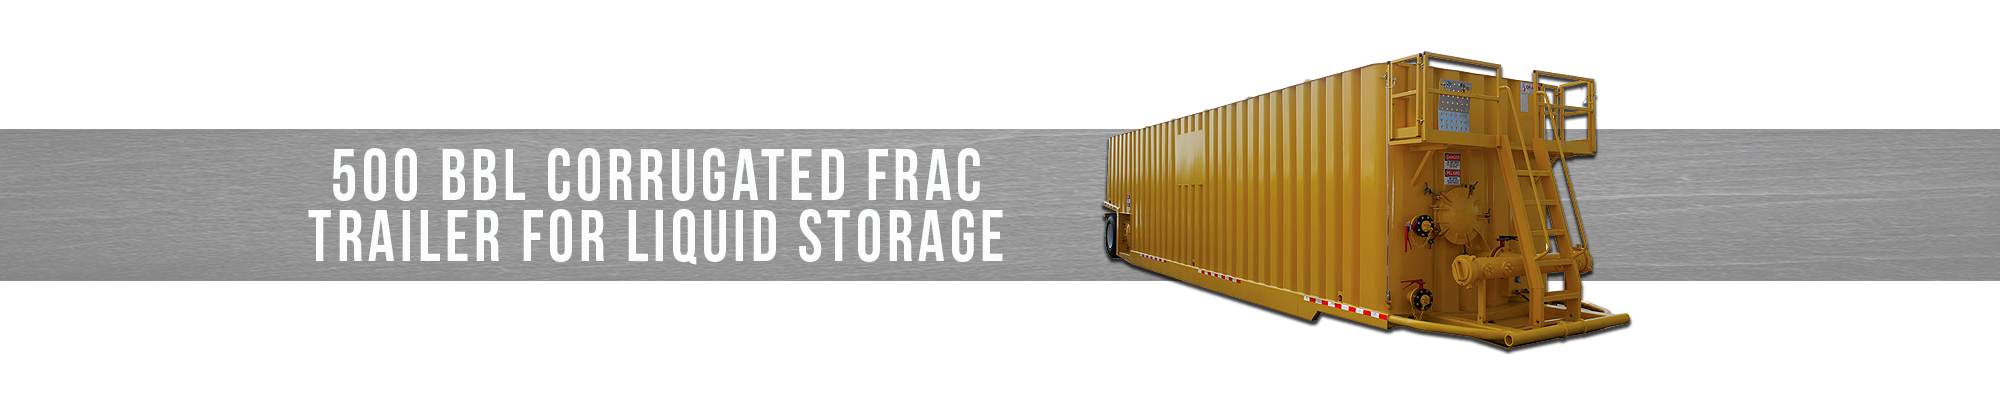 500 BBL Corrugated Frac Trailer for Liquid Storage